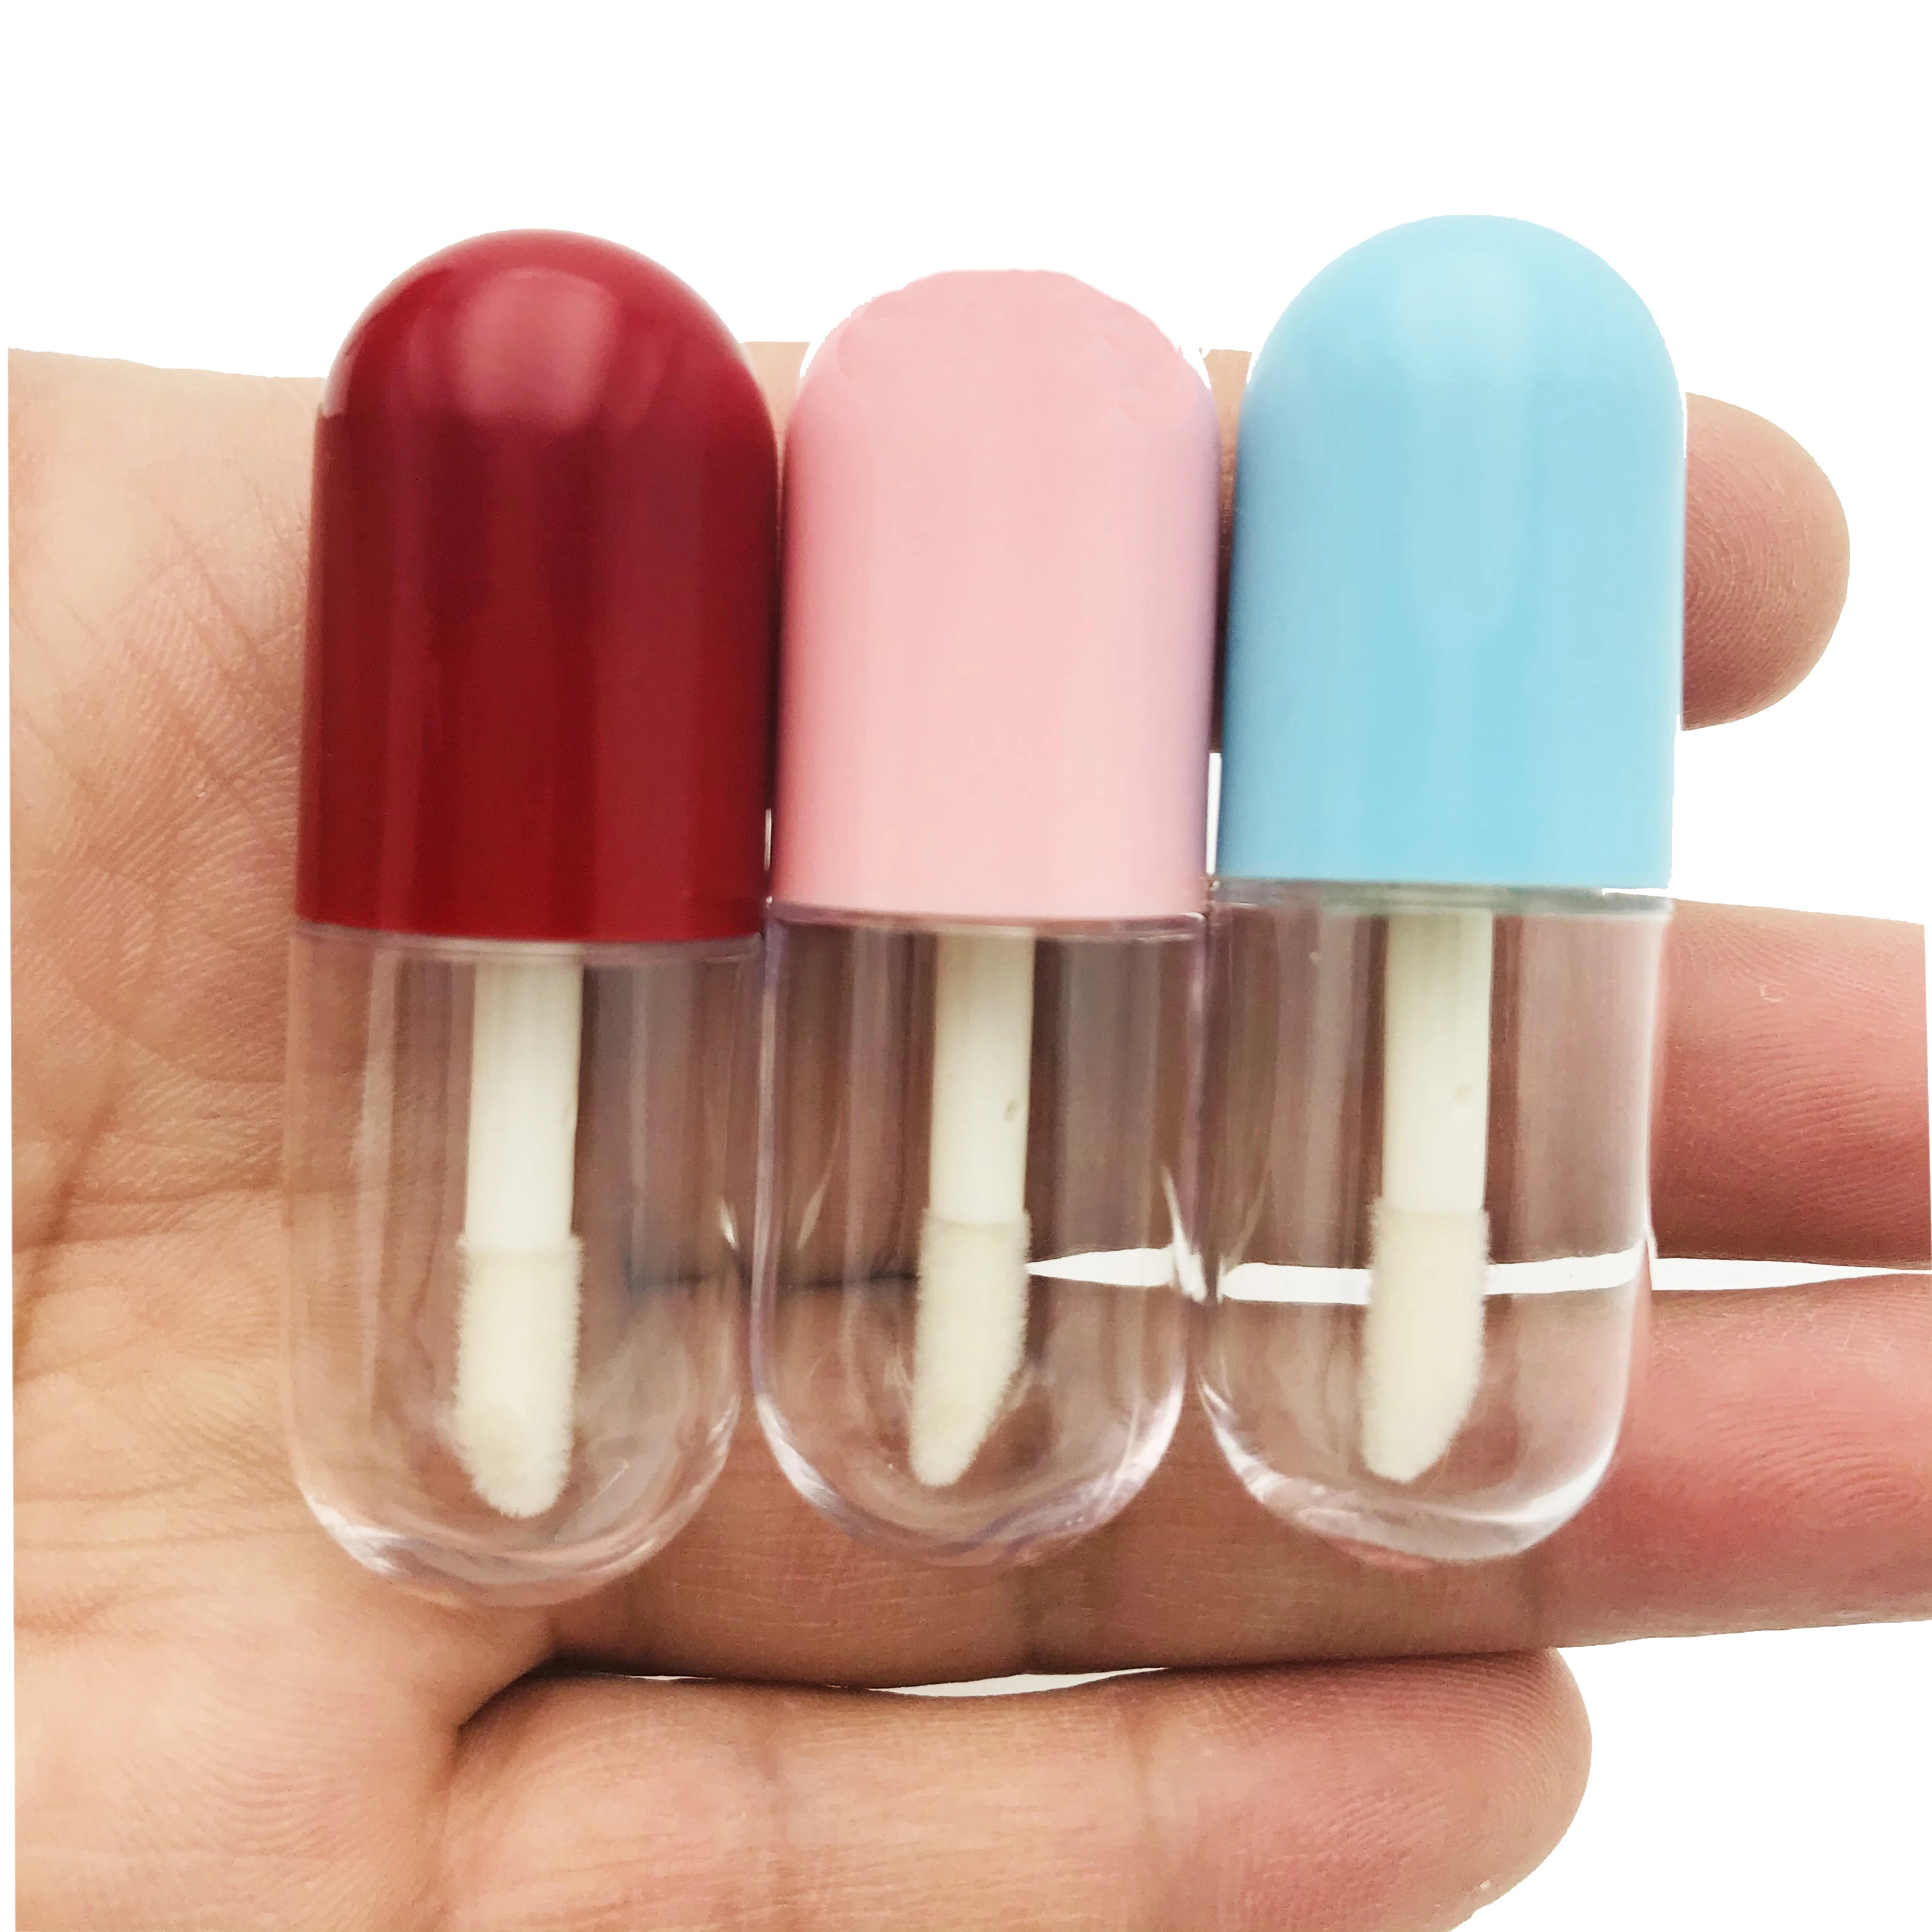 100pcs 3ml Empty Lip Gloss Bottles Blue Cap lip balm tubes Clear lipstick Eyelash Packing Container wholesale